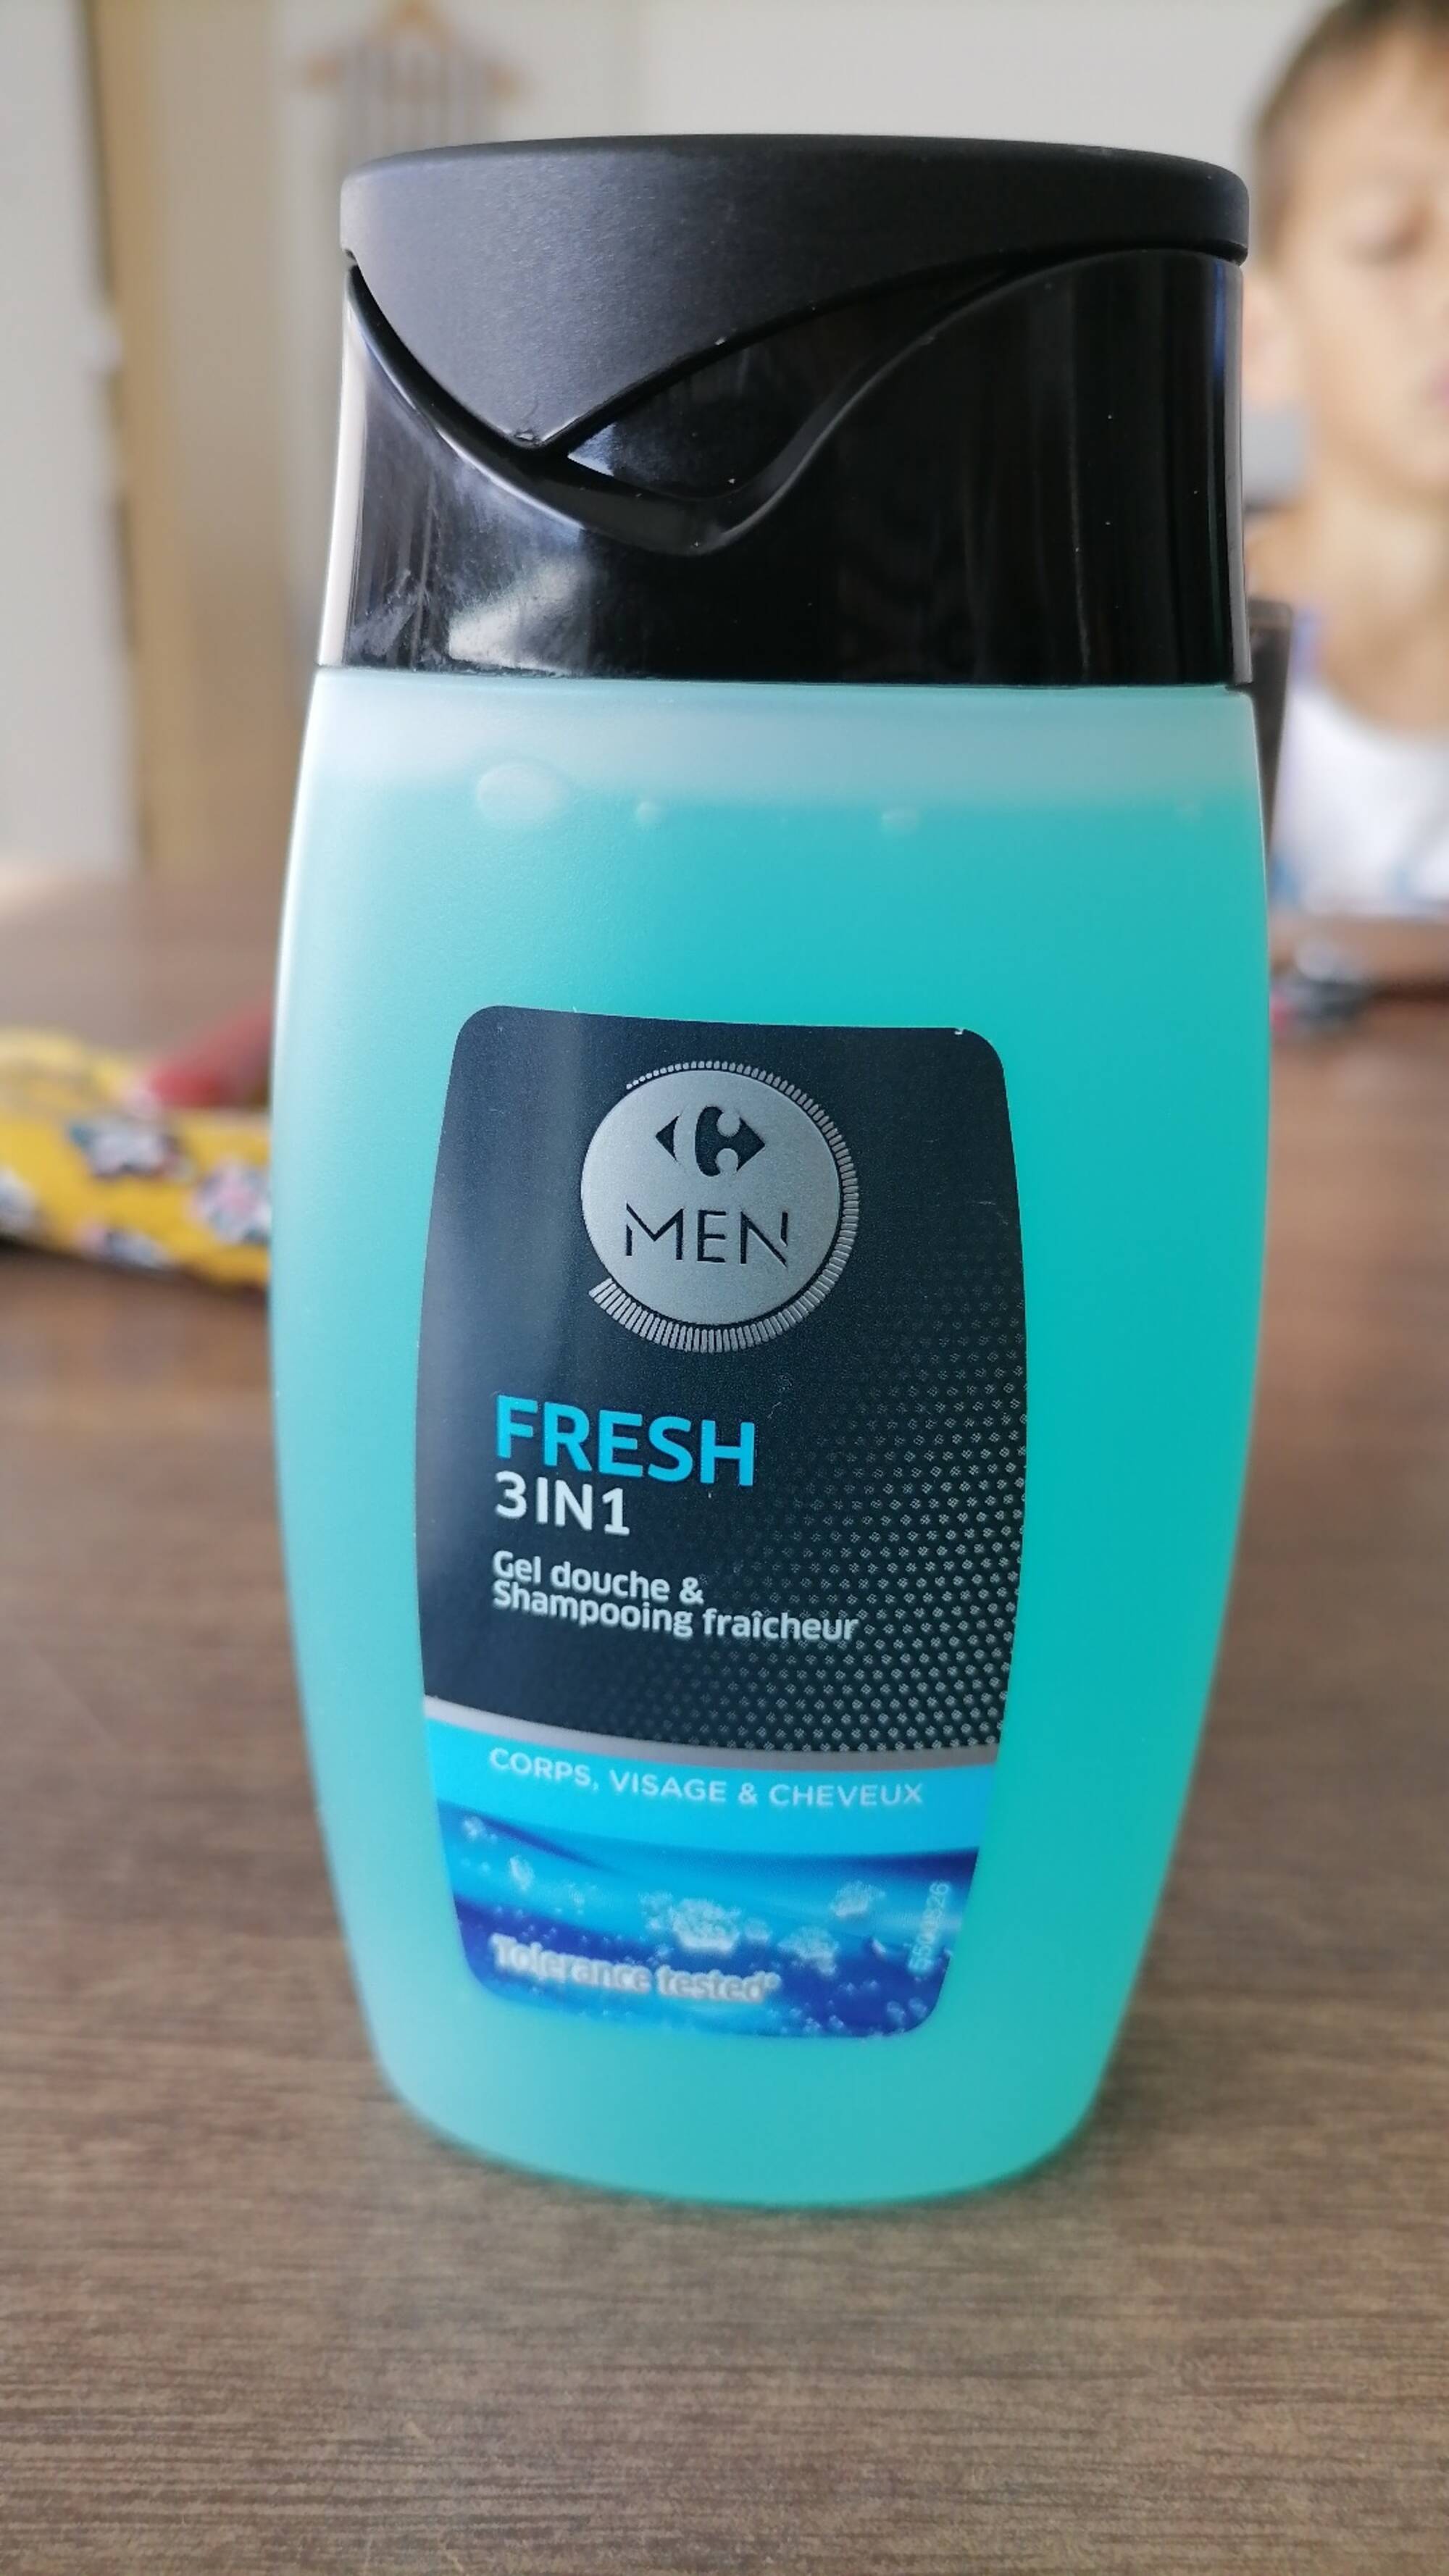 CARREFOUR - Men Fresh 3in1 - Gel douche & Shampooing fraîcheur